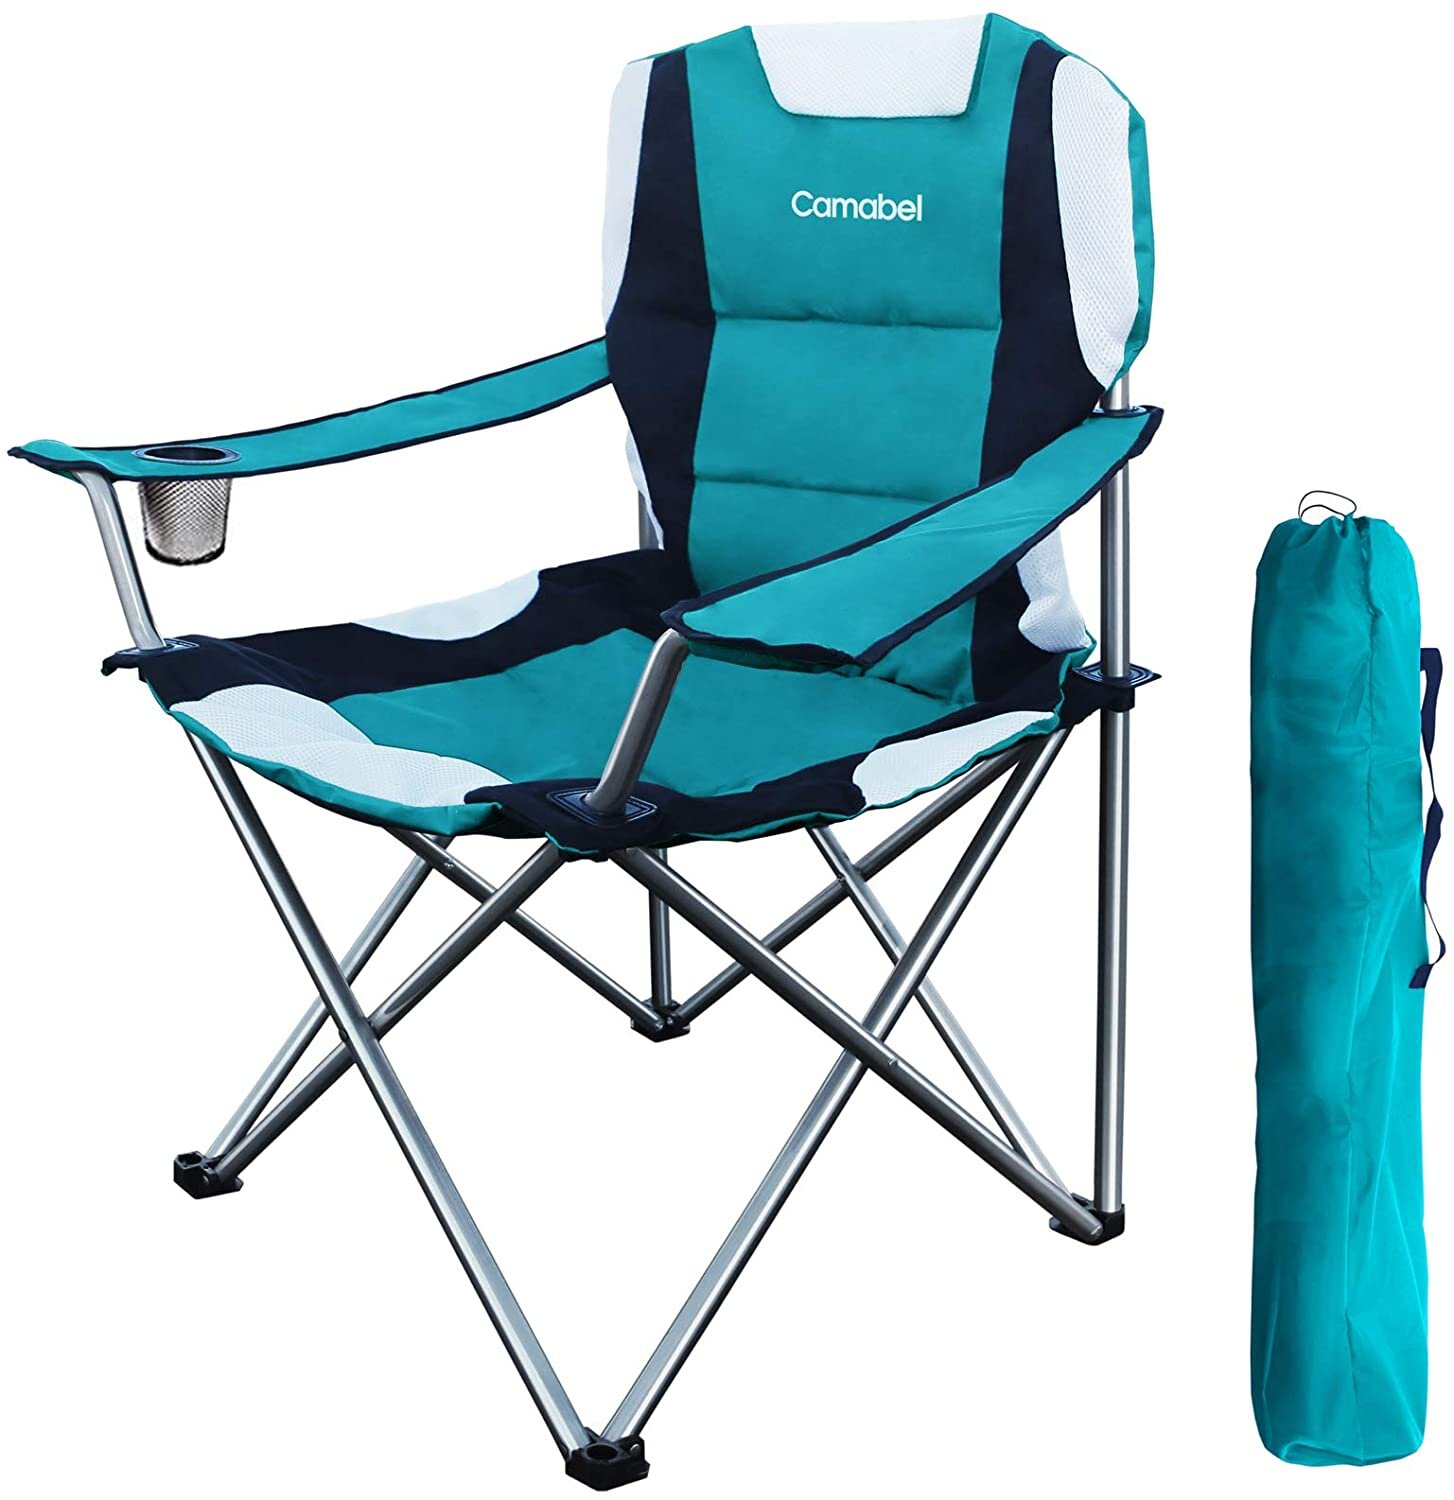 Camabel Folding Camping Chair With Cushion Reviews Wayfair